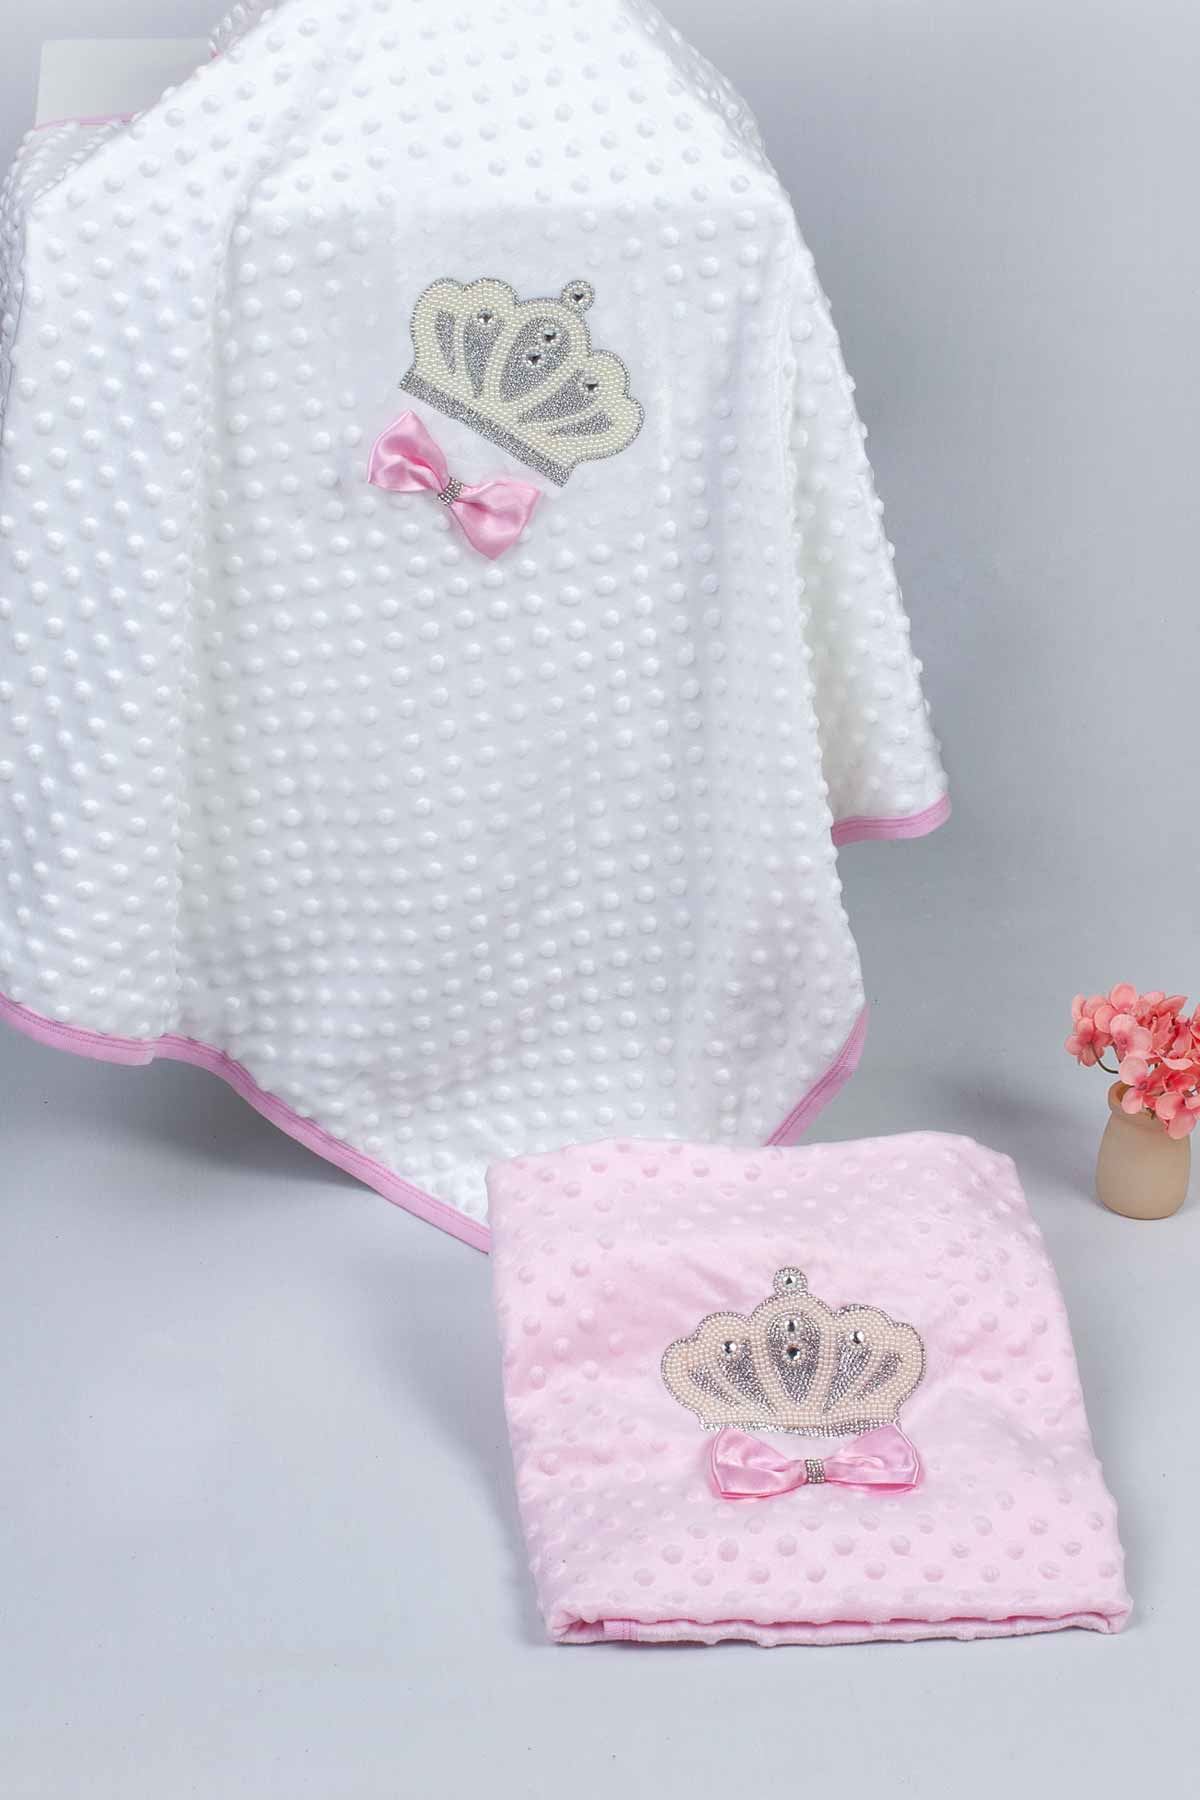 White Girl Baby Blanket King Queen Girls Babies Newborn Crown Embossed Ultra Soft Antibacterial Infants Girls Princess Models